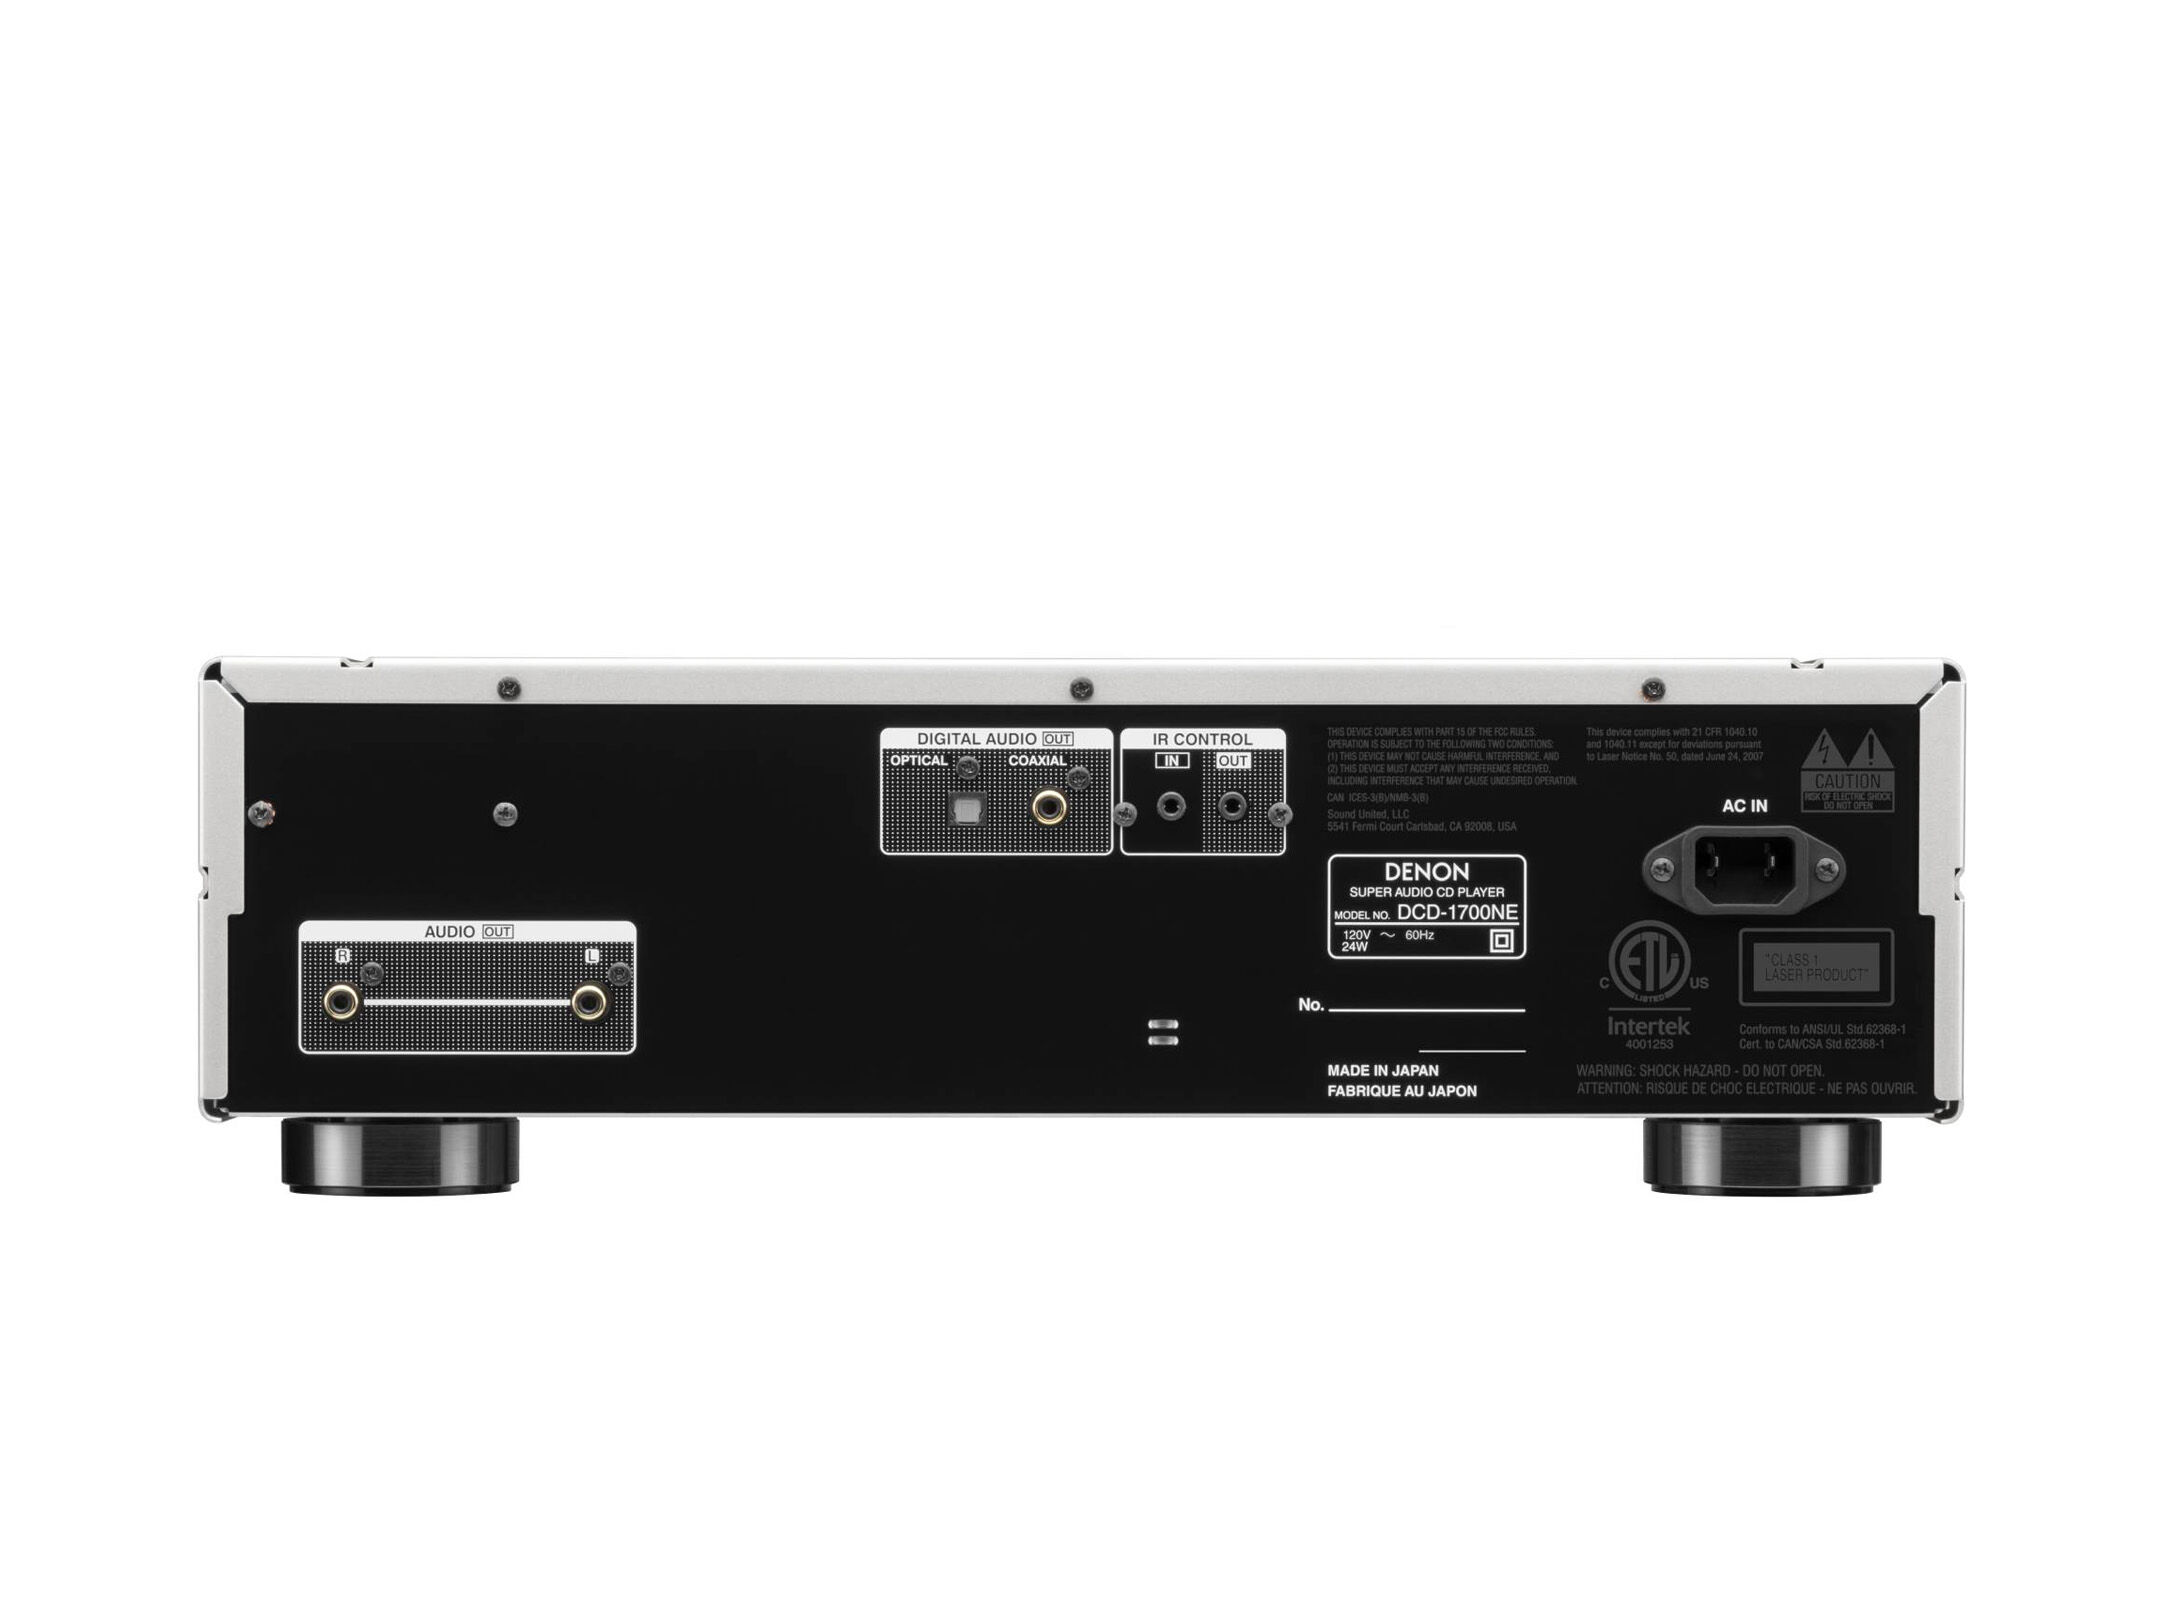 DCD-1700NE - CD/SACD player with Advanced AL32 Processing Plus 